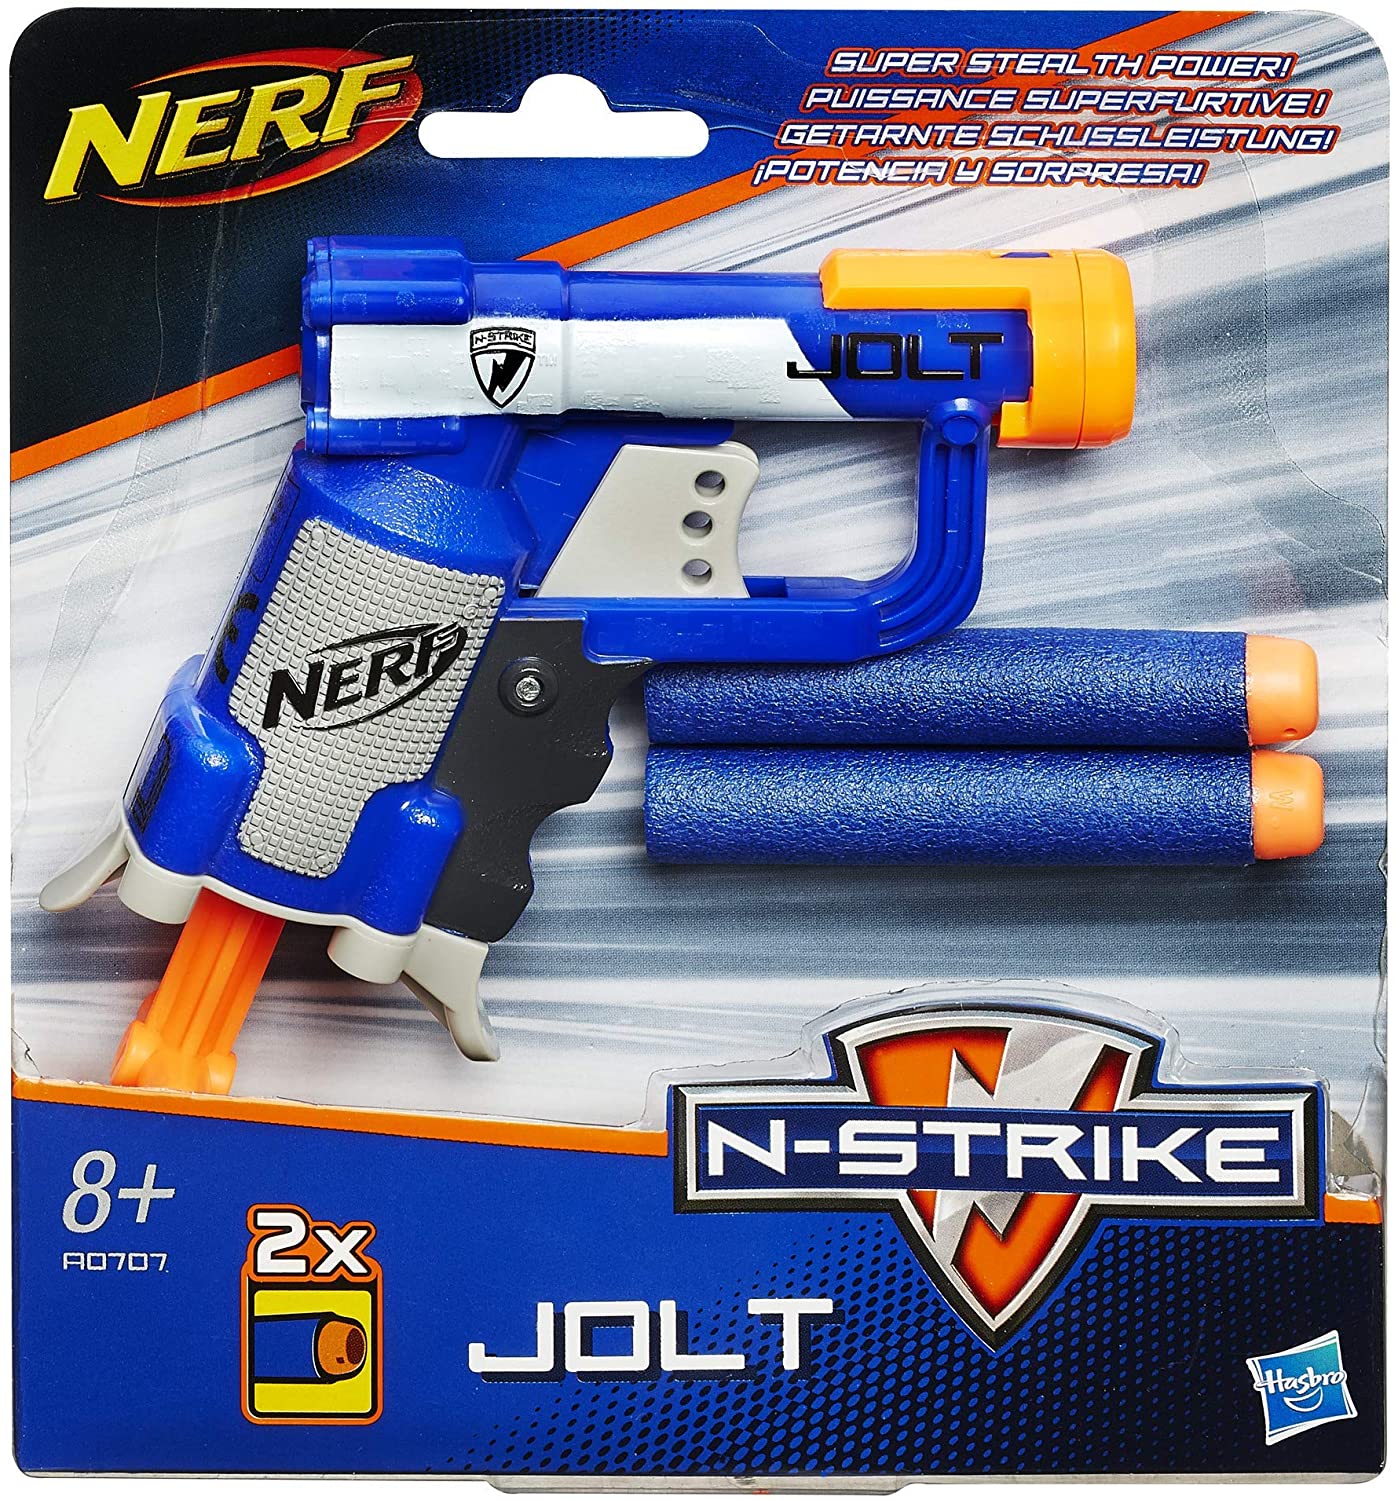 Nerf A0707EU6 N-Strike Elite Jolt, Giocattolo, multicolore